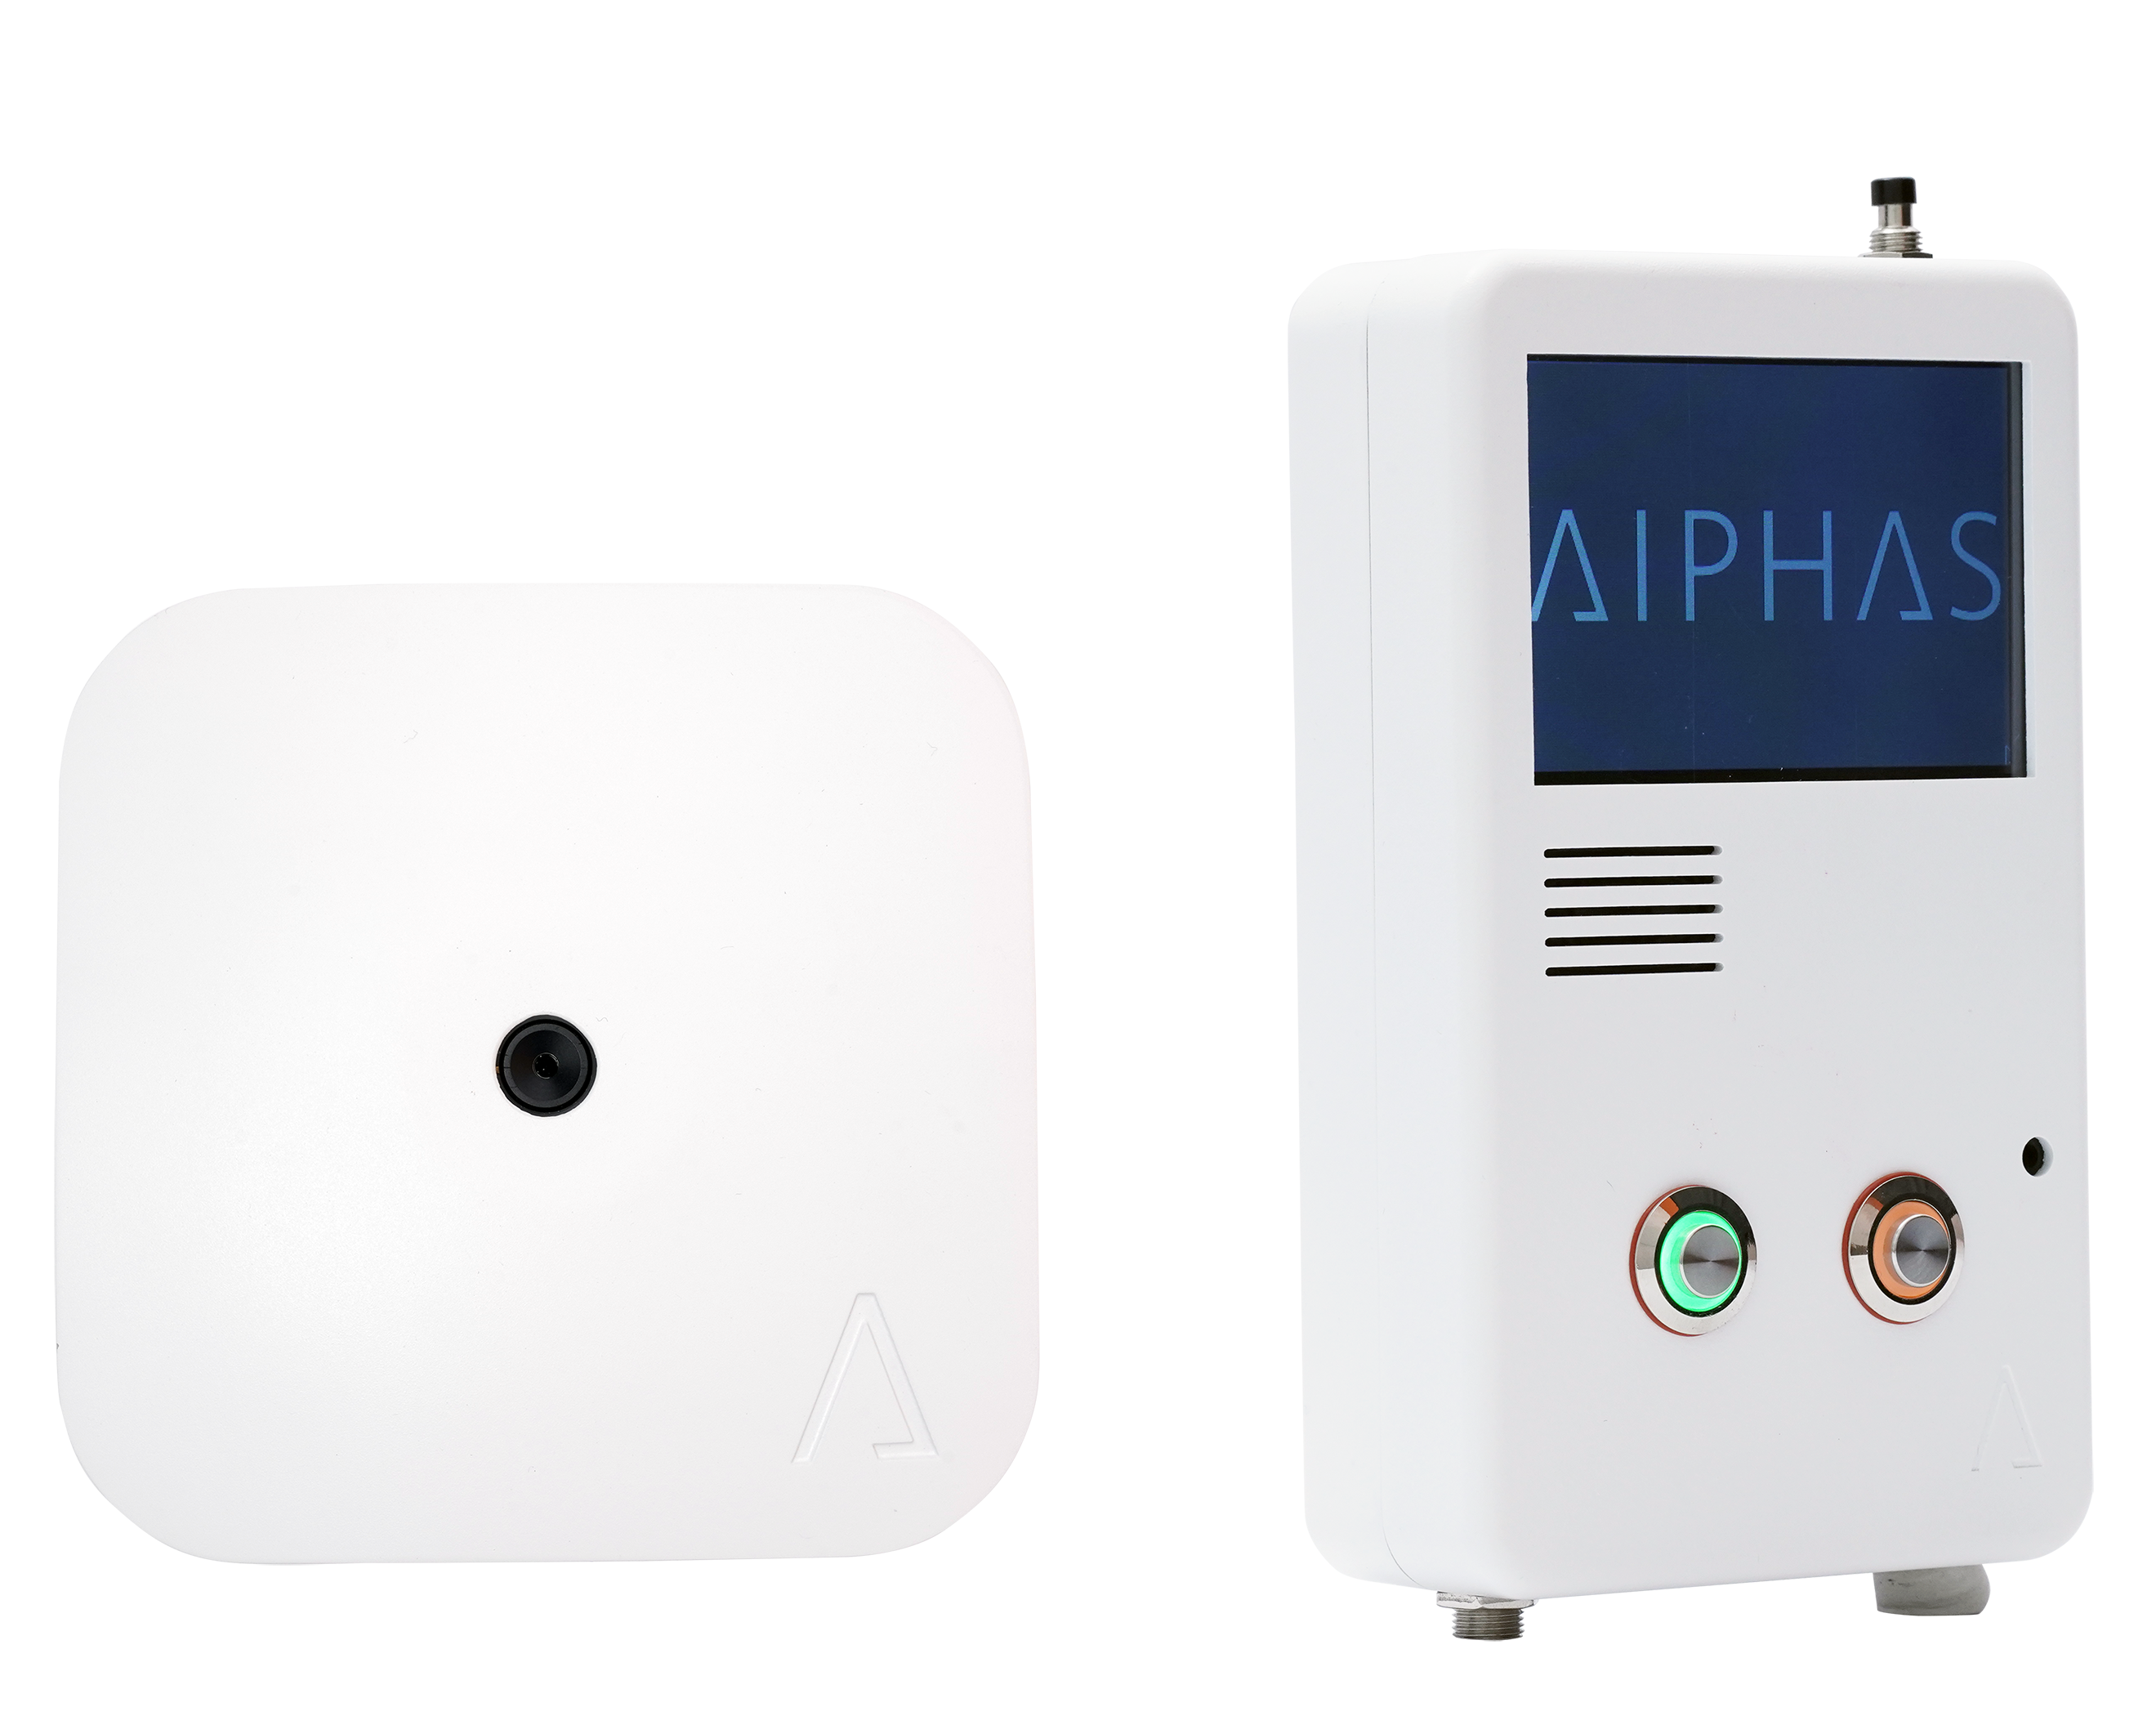 AIPHAS Smart Ward Total Solution-
1. Aipha-Call
2. Aipha-Eye
3. Aipha-Board